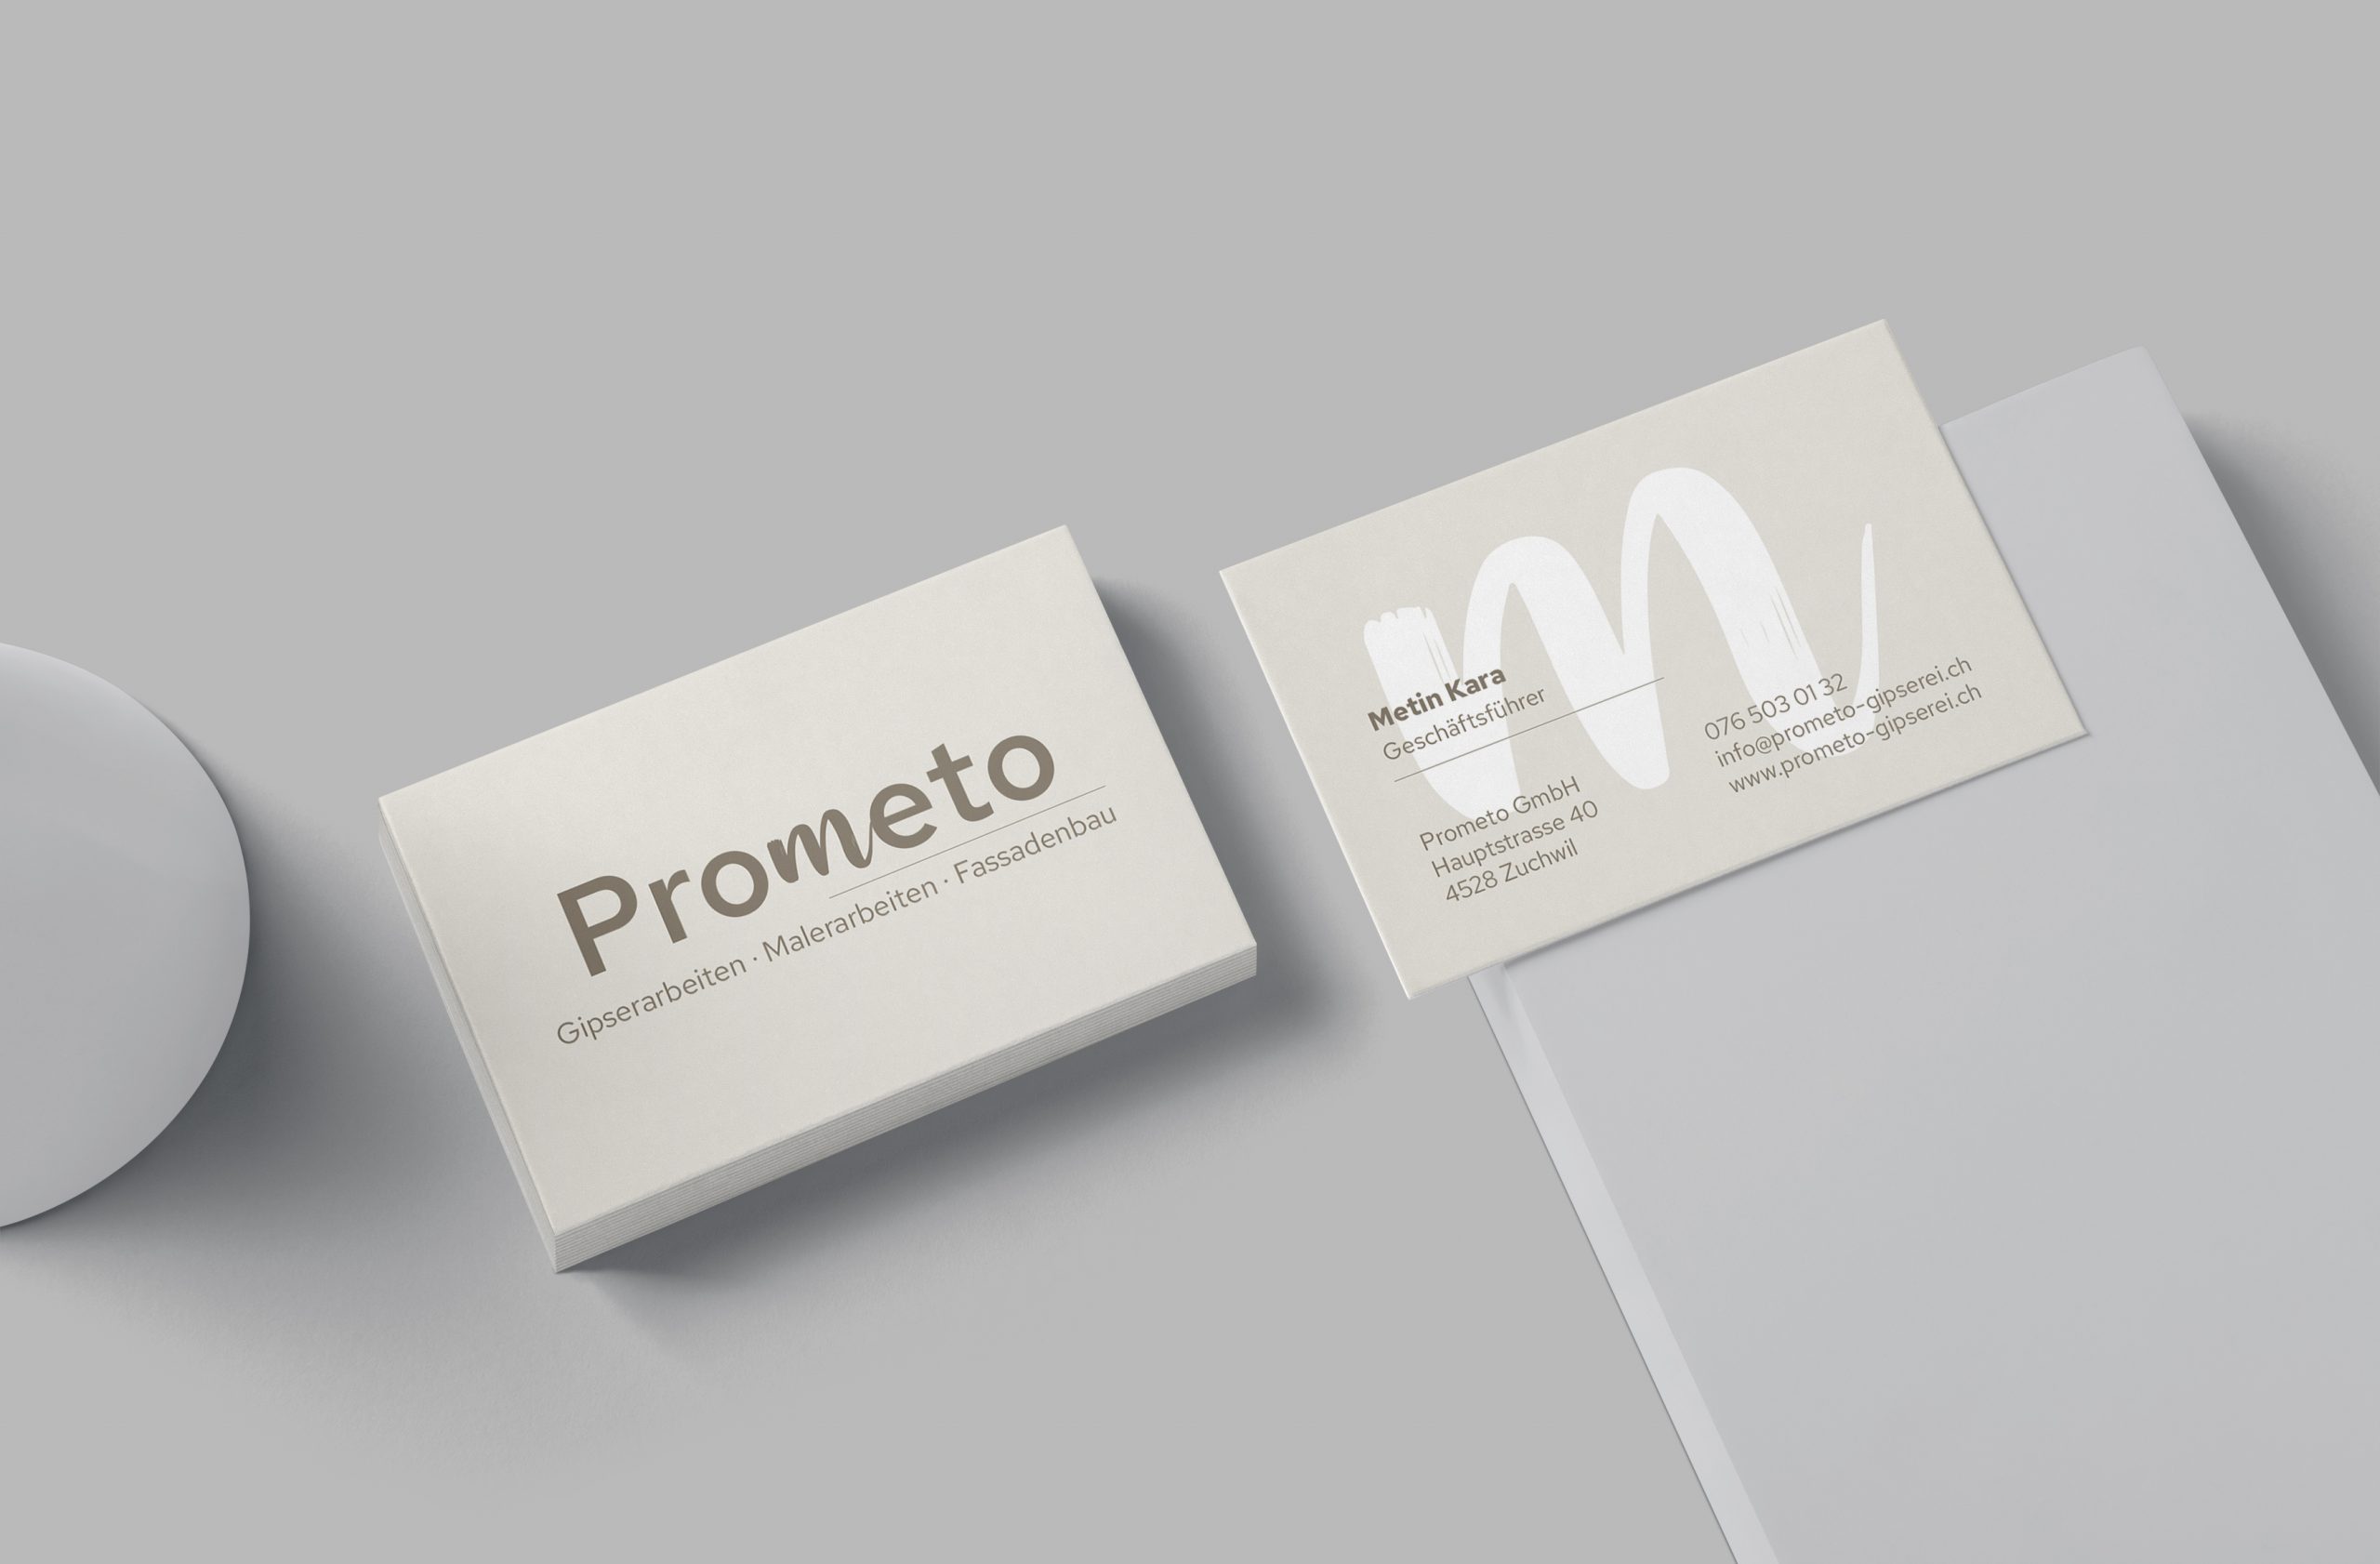 Prometo GmbH